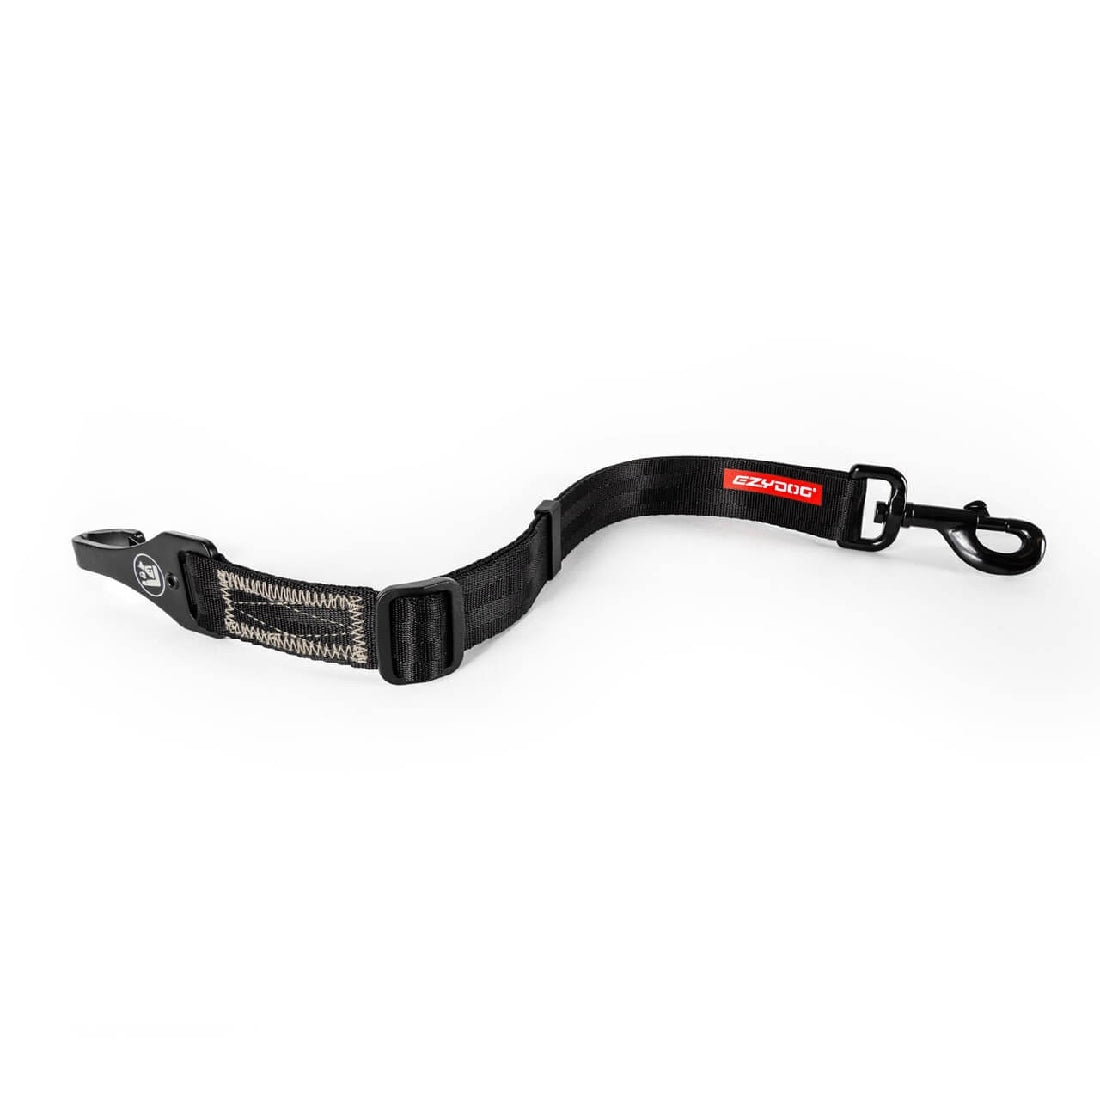 EzyDog Click ISOFIX Standard Seatbelt Attachment Black 45-65cm